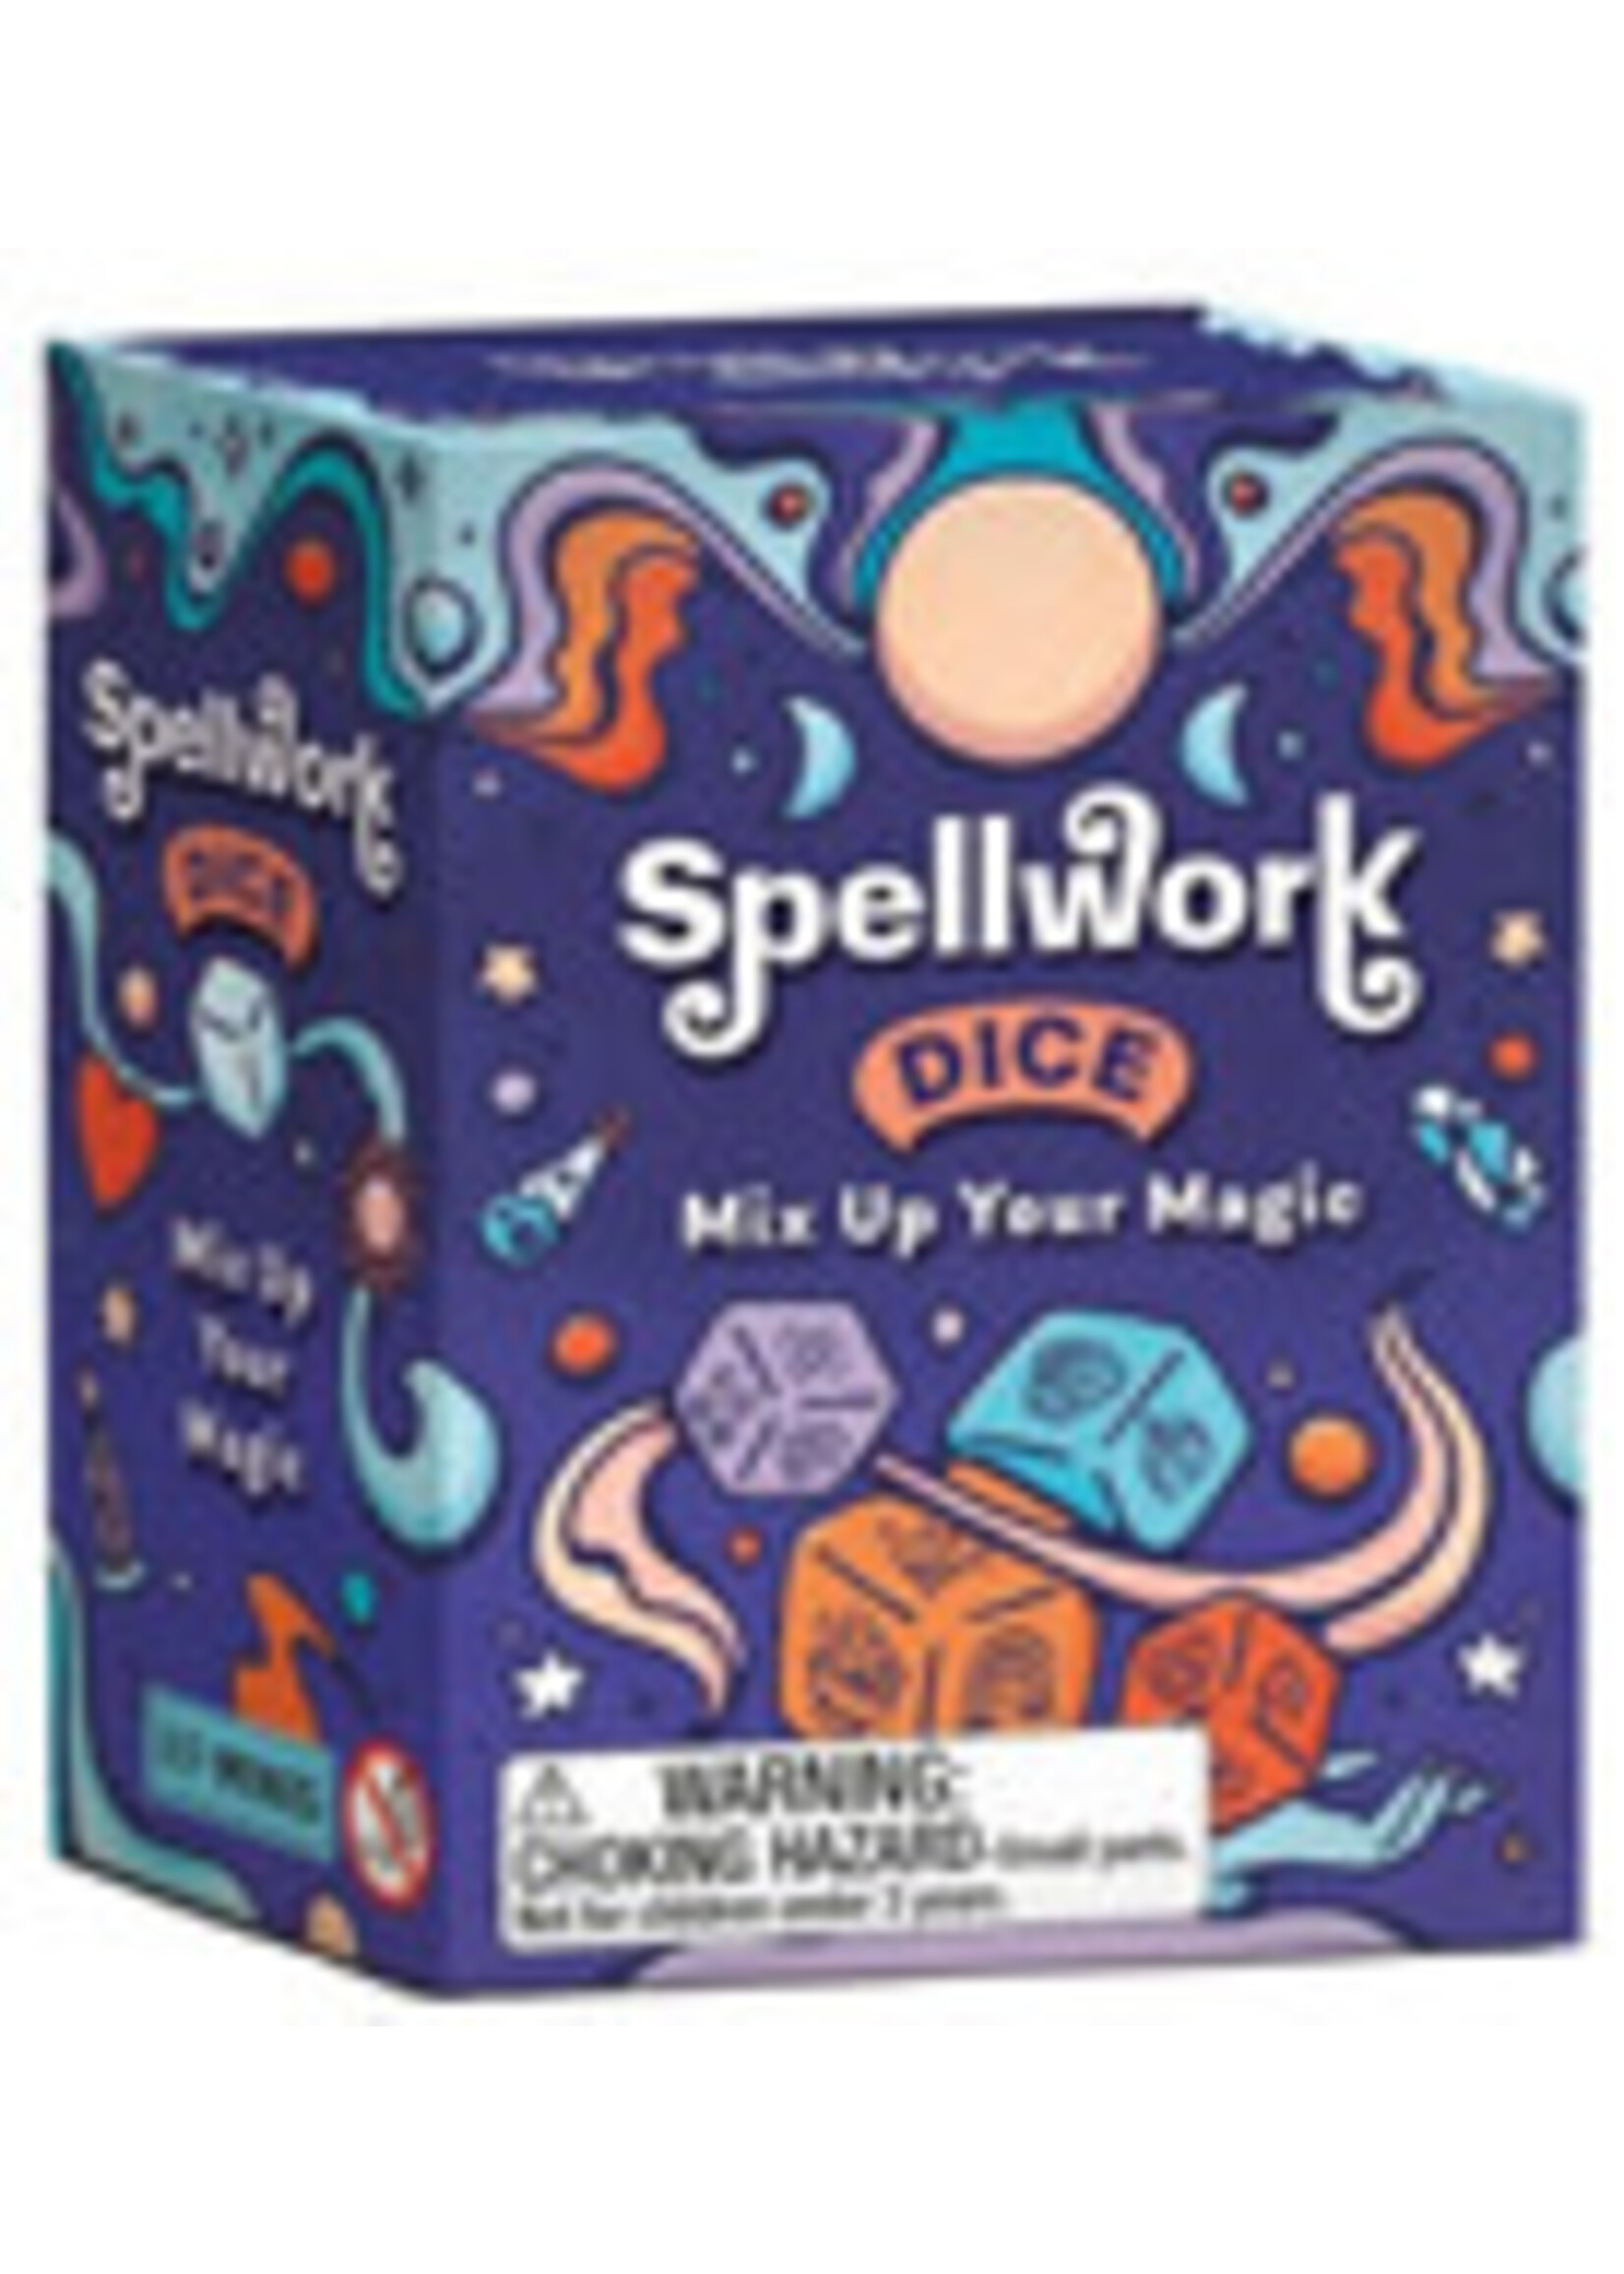 Spellwork Dice ~ Mix Up Your Magic